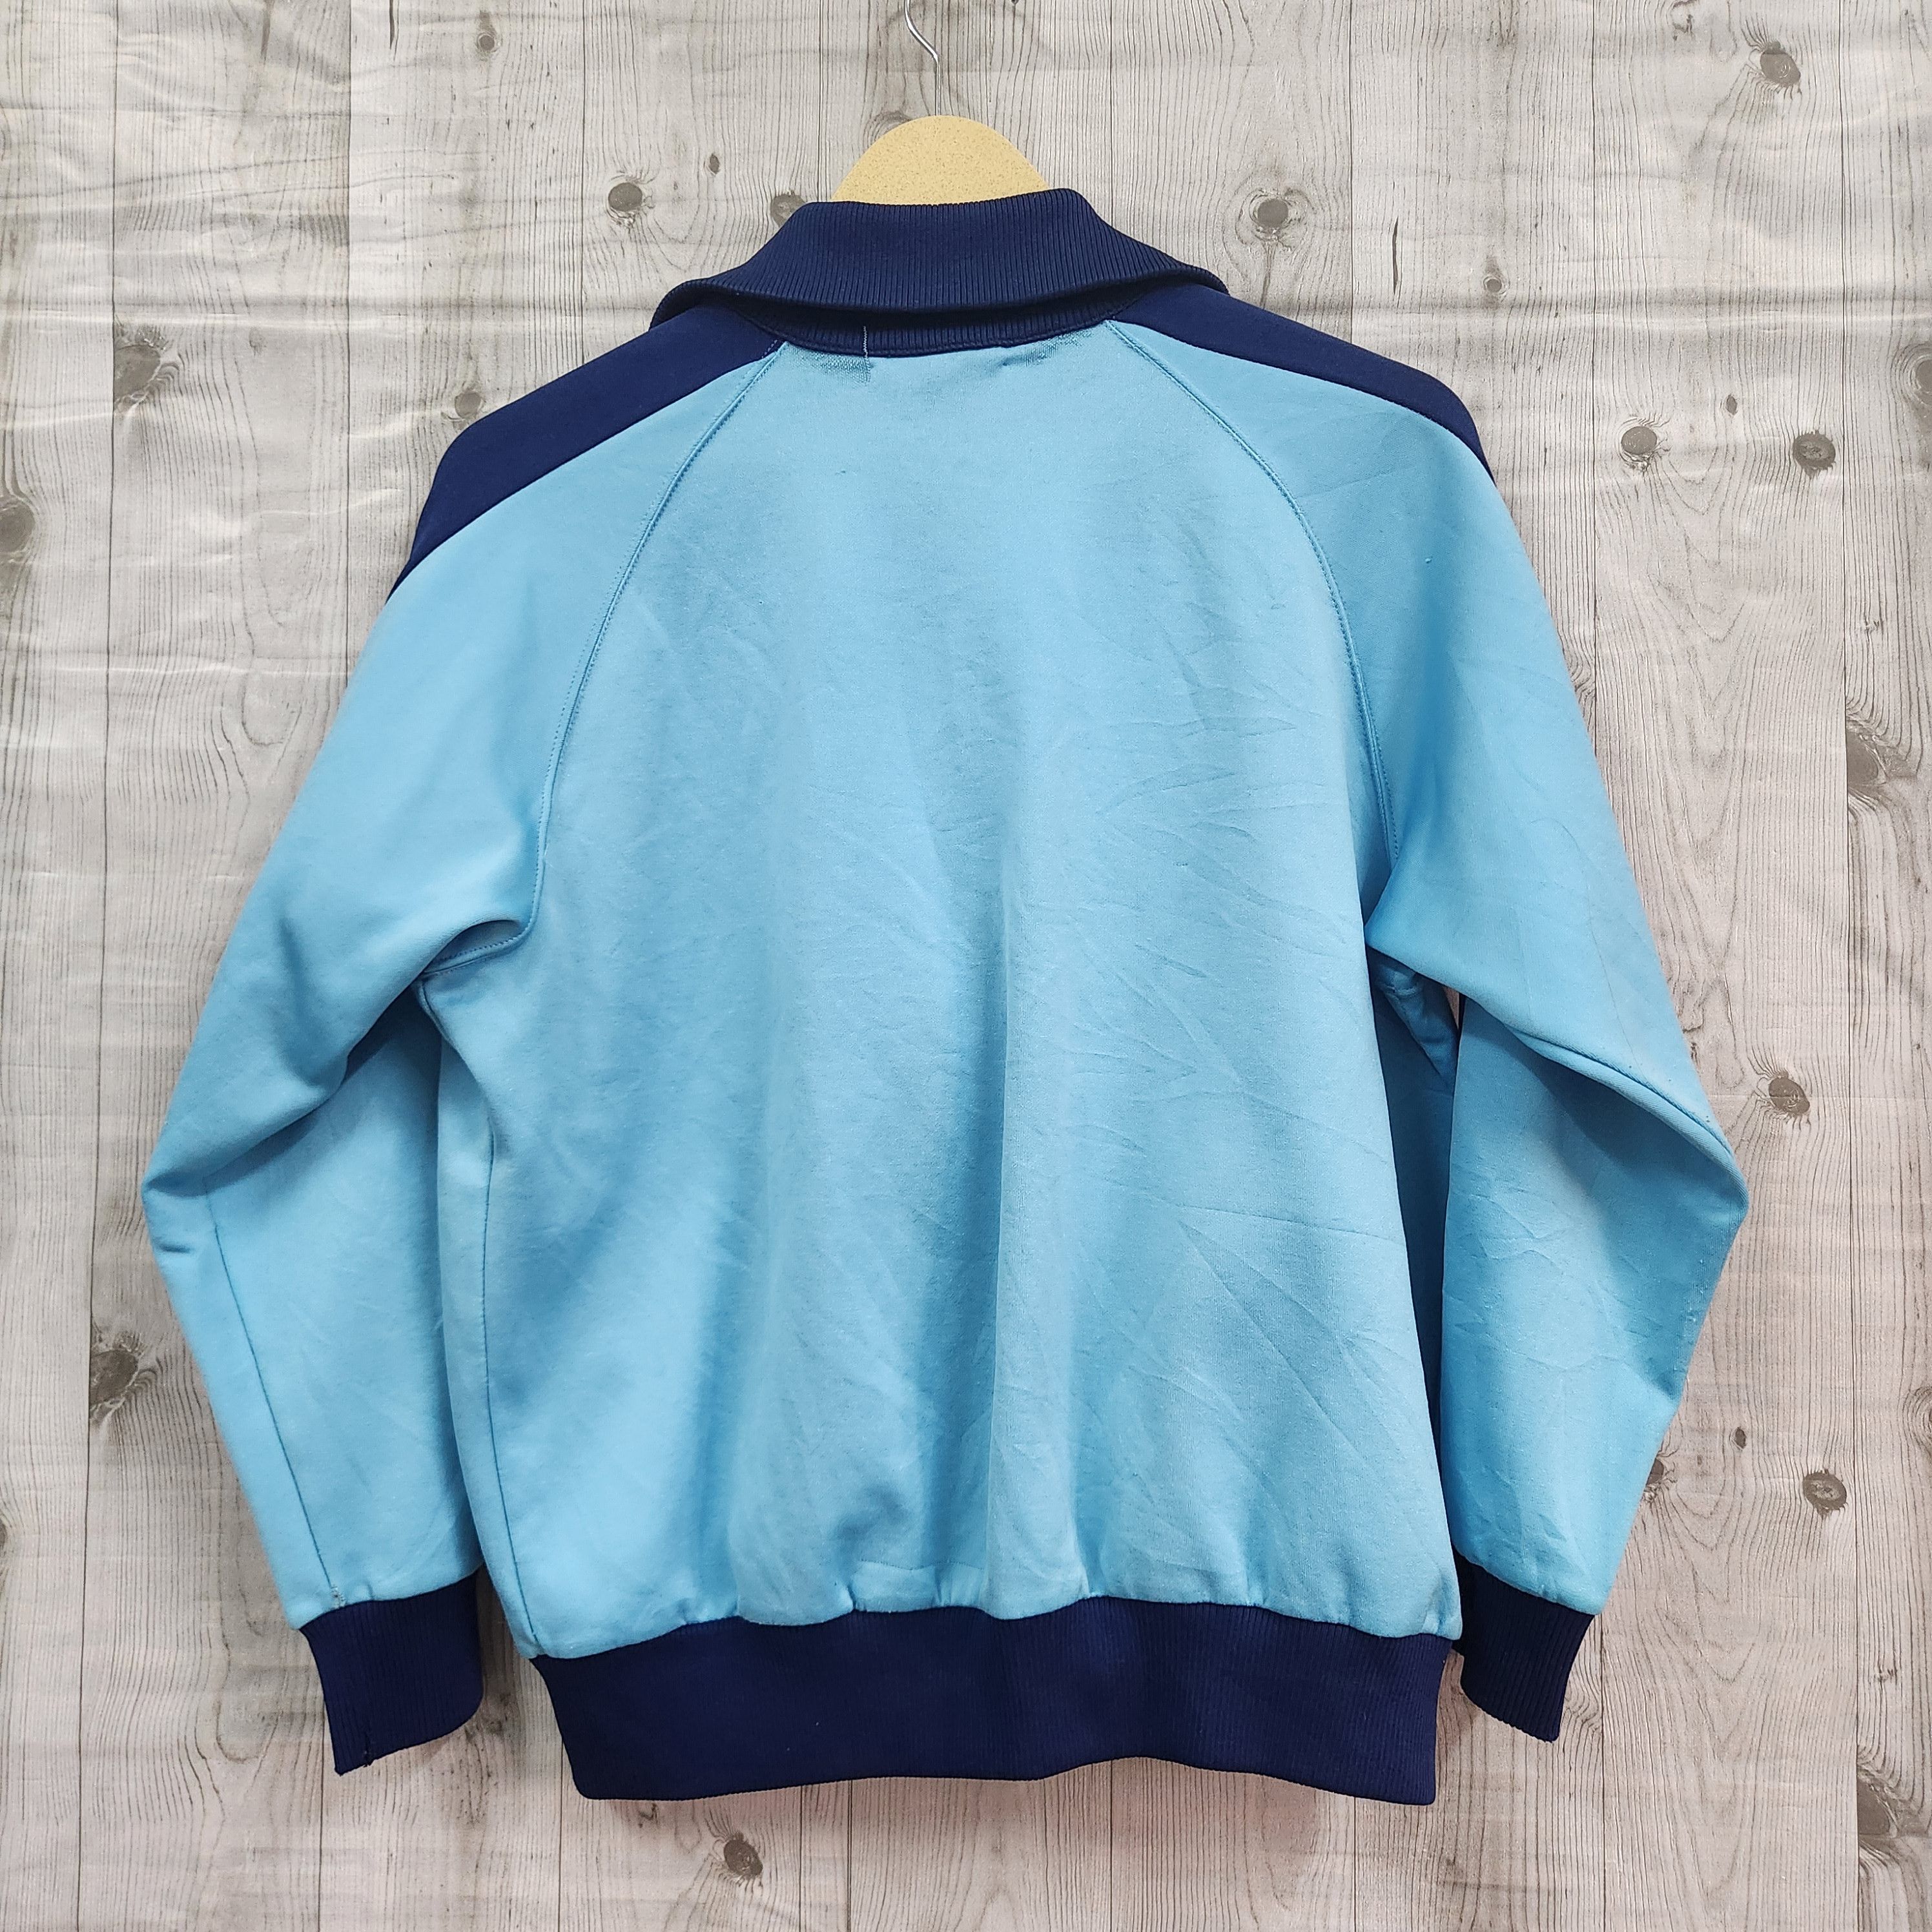 PUMA Japan Tracktop Sweater Vintage 1990s Distressed Elbow - 18